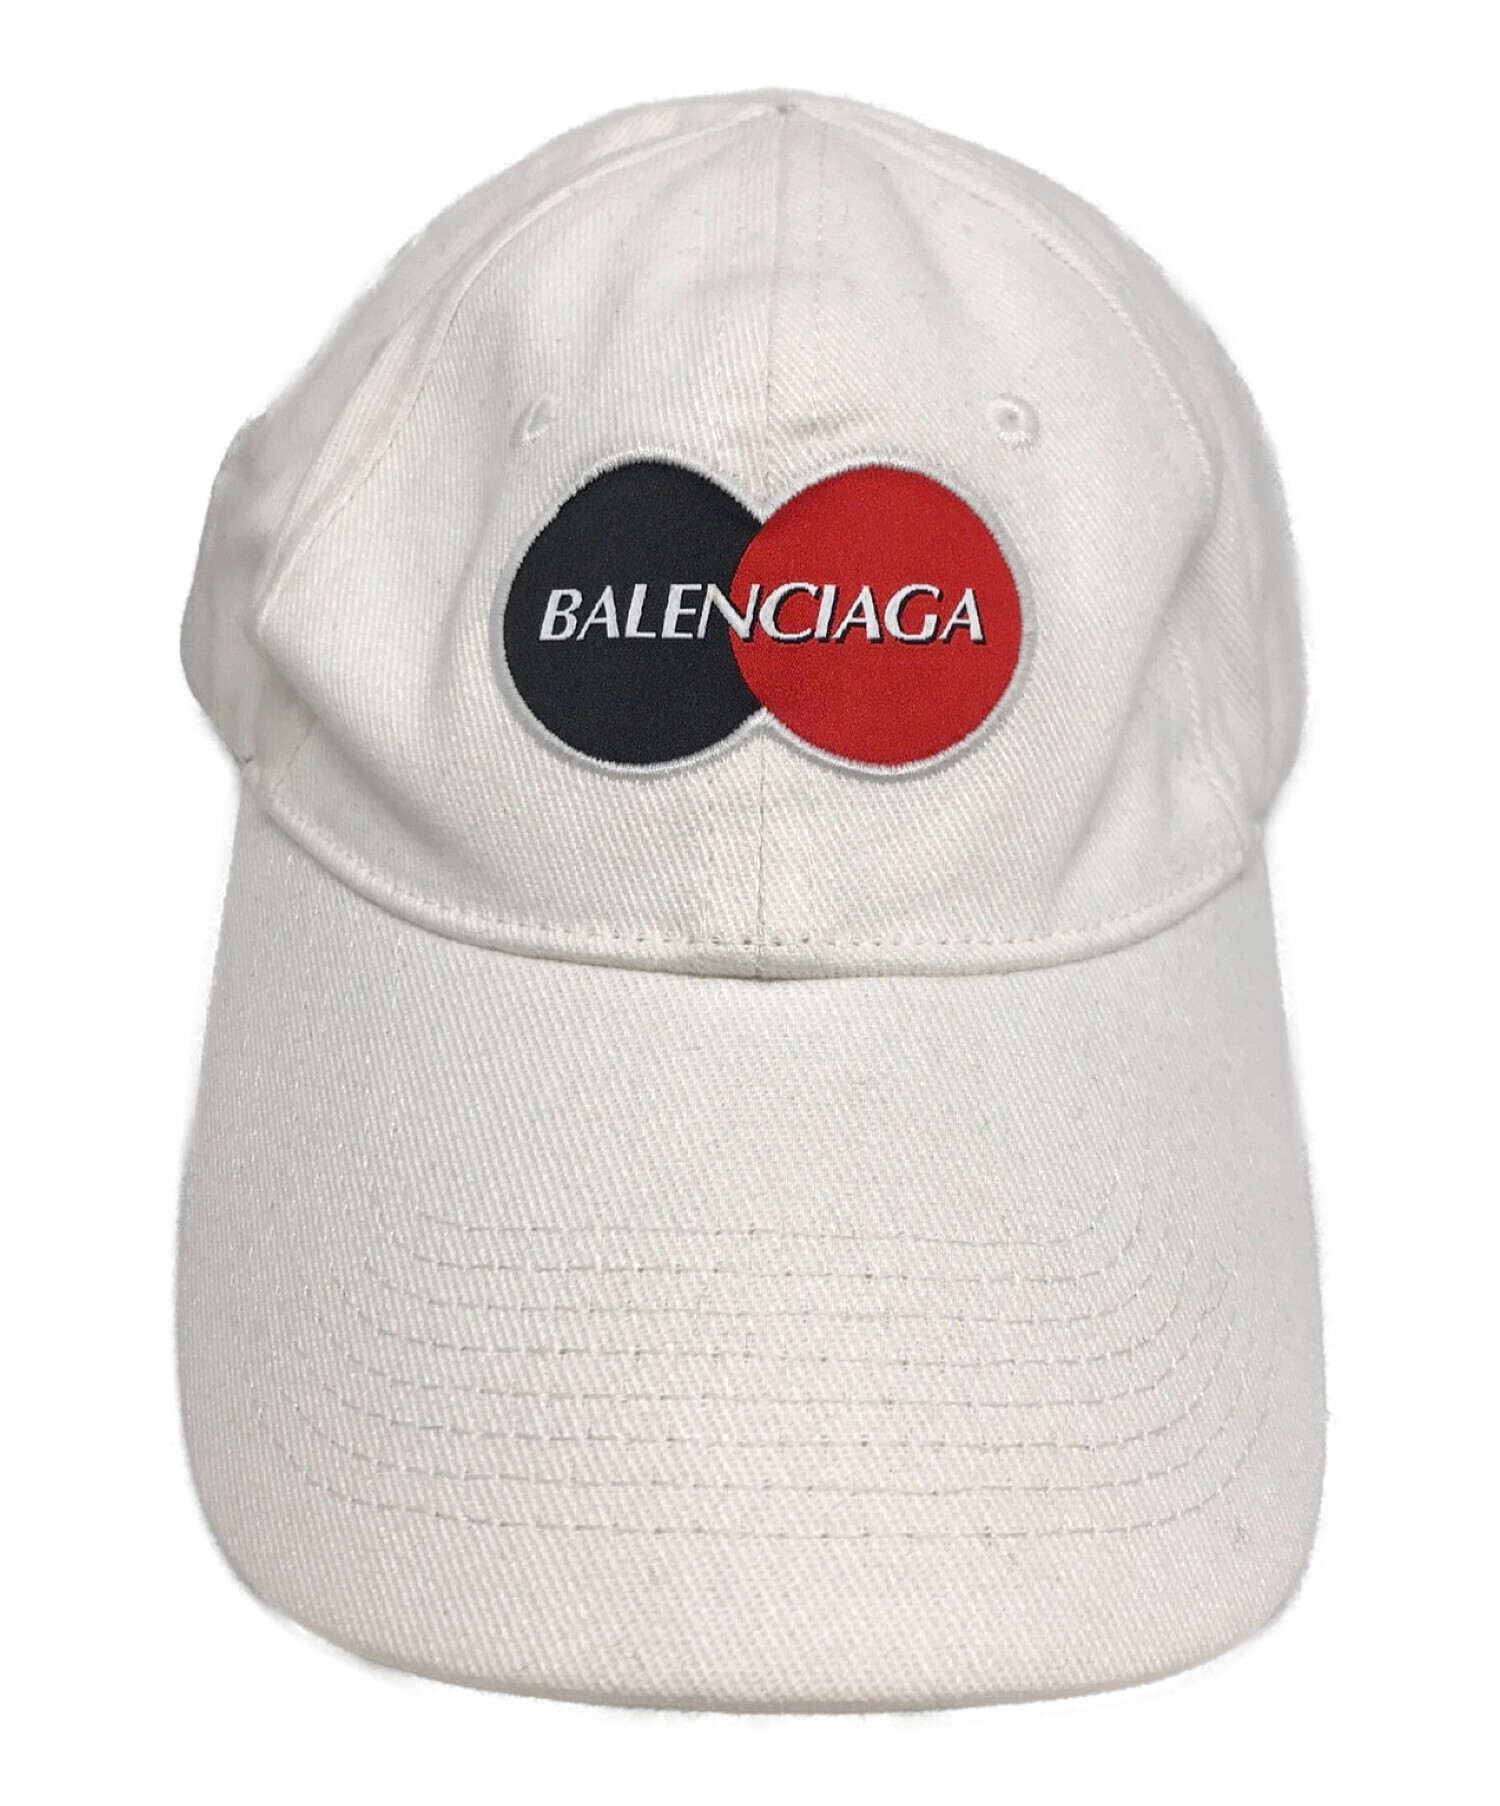 Balenciaga バレンシアガ ロゴ キャップ